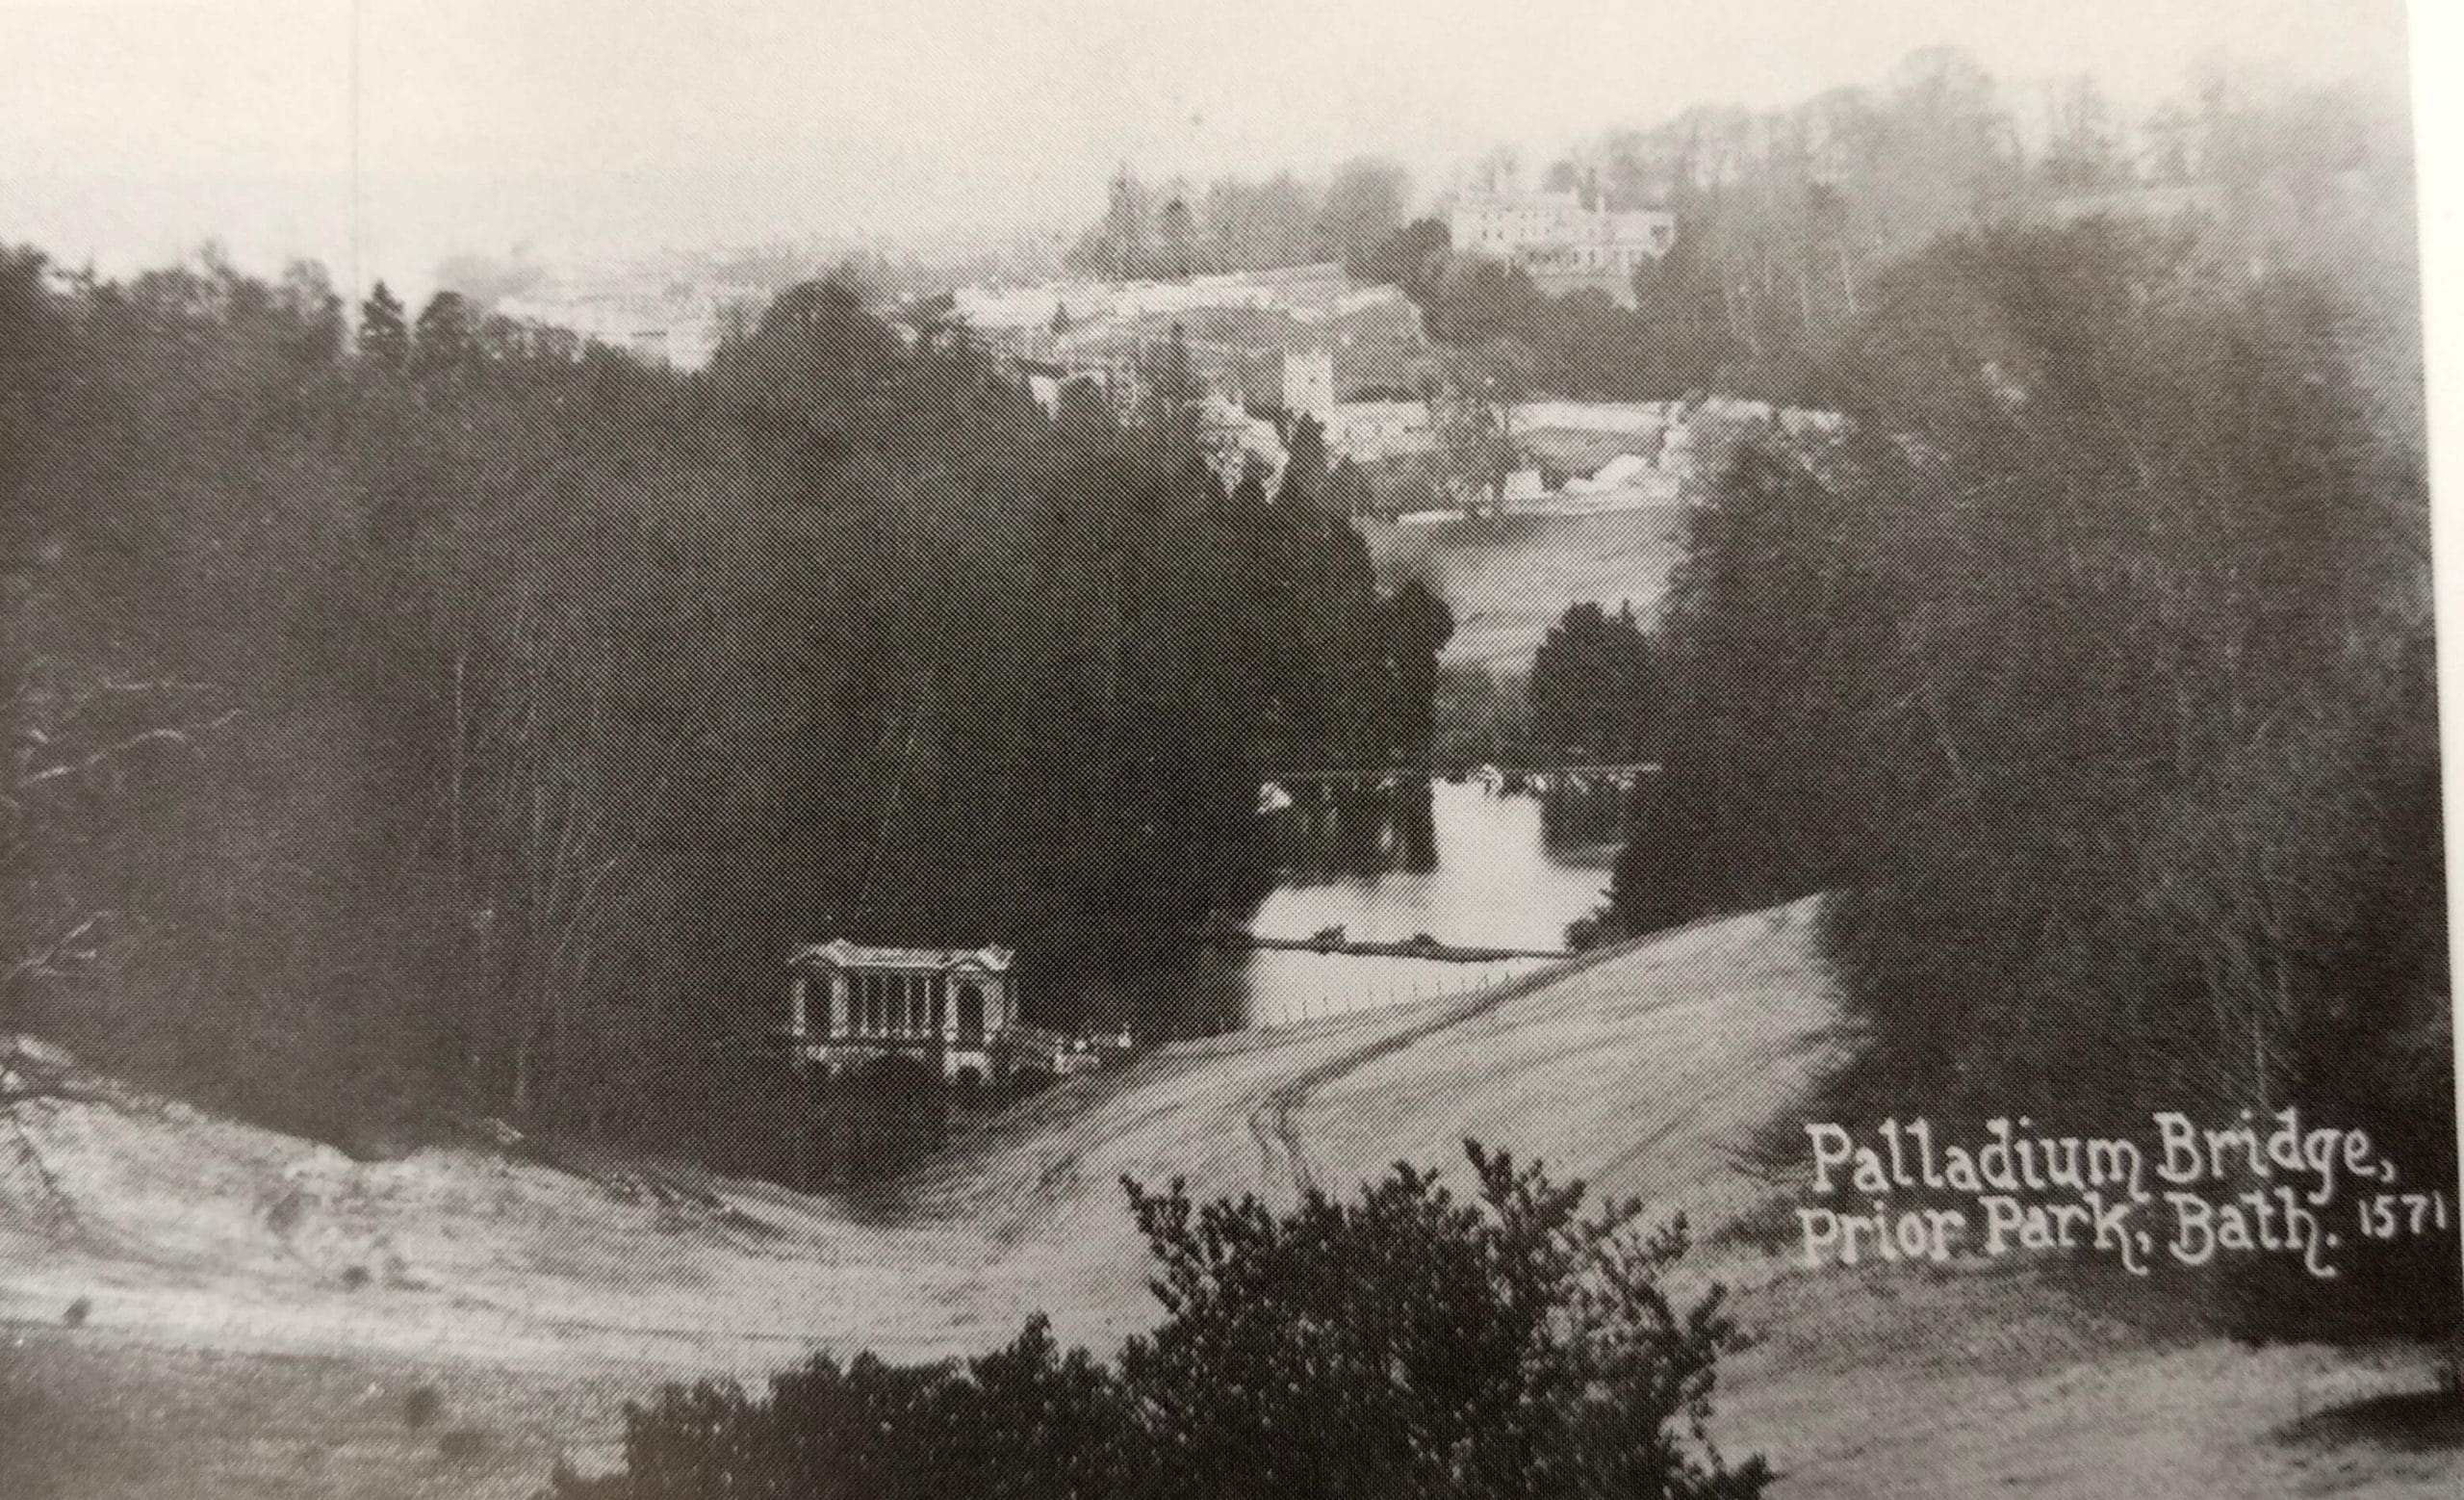 Palladian bridge at Prior Park about 1912